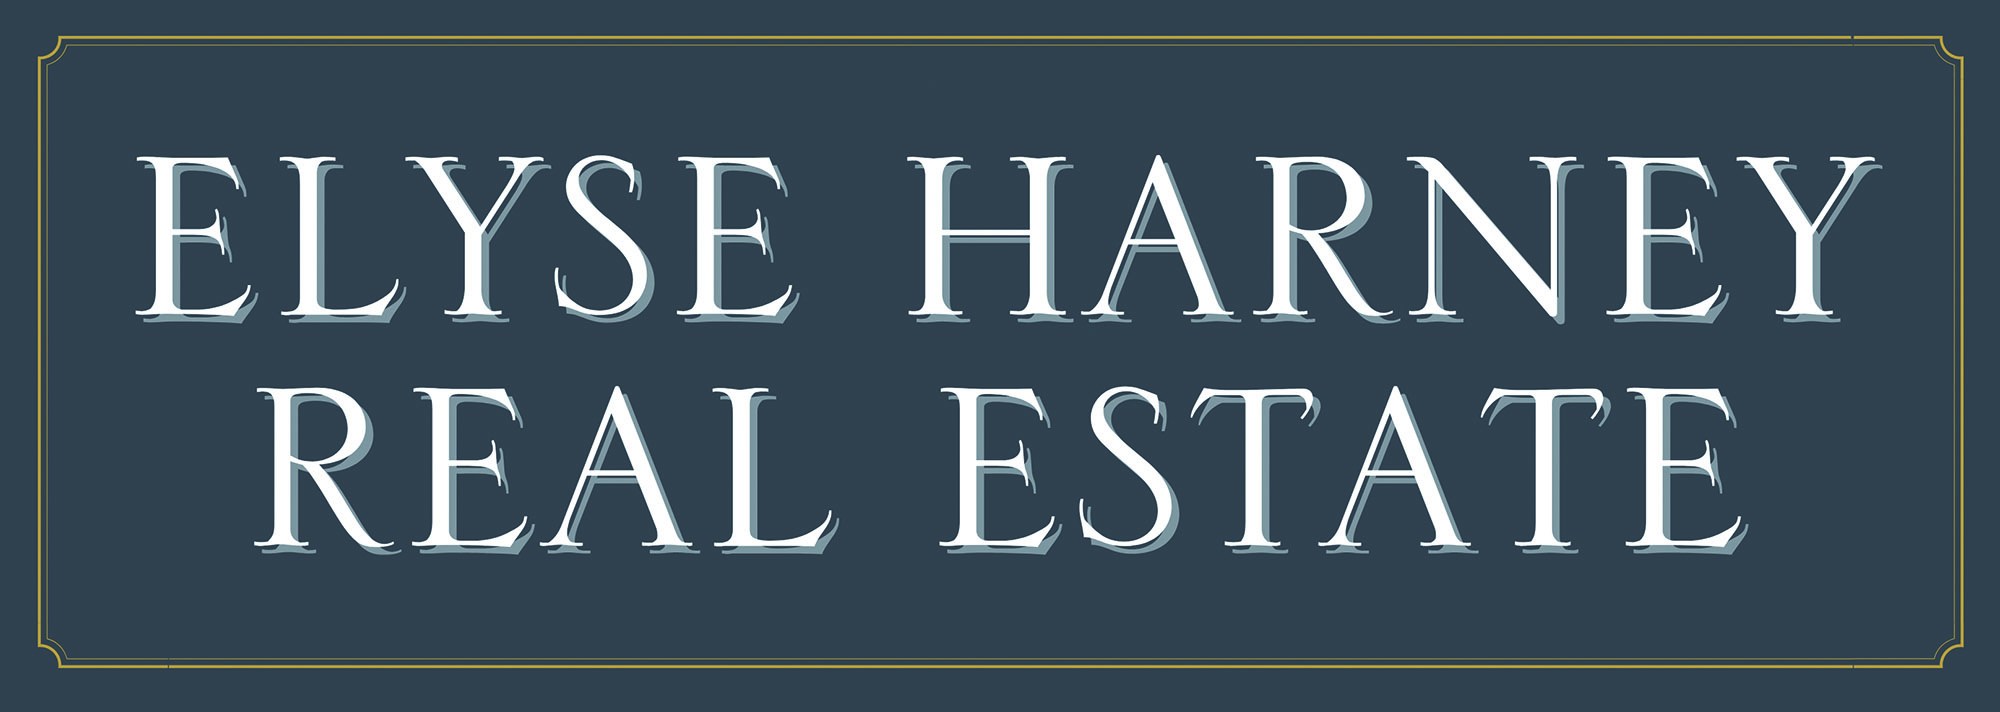 Elyse Harney Real Estate